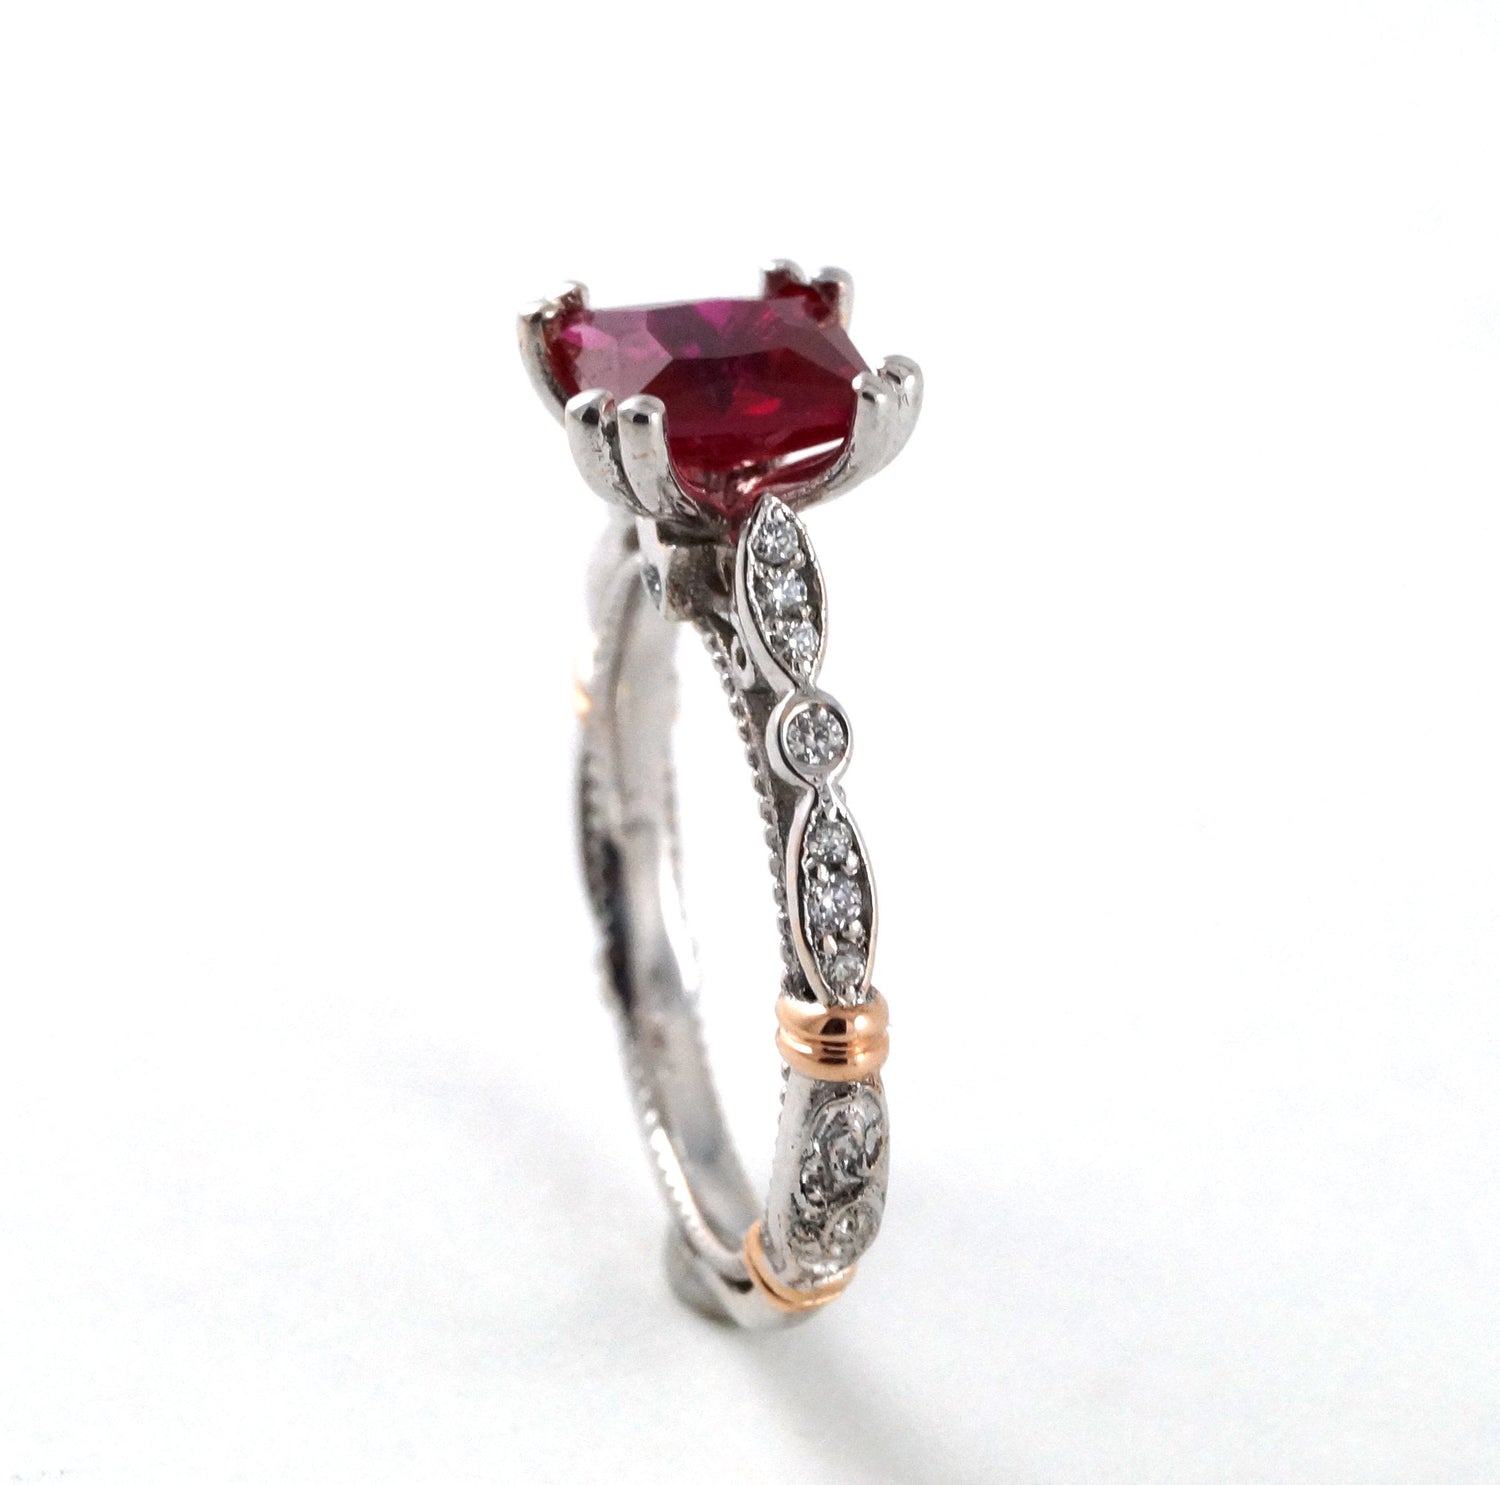 Vitorian Inspired Filigree Antique Vintage Elegant Disney Princess Ring White Gold and Diamond Engagement Millgrain Ruby Garnet Diamond